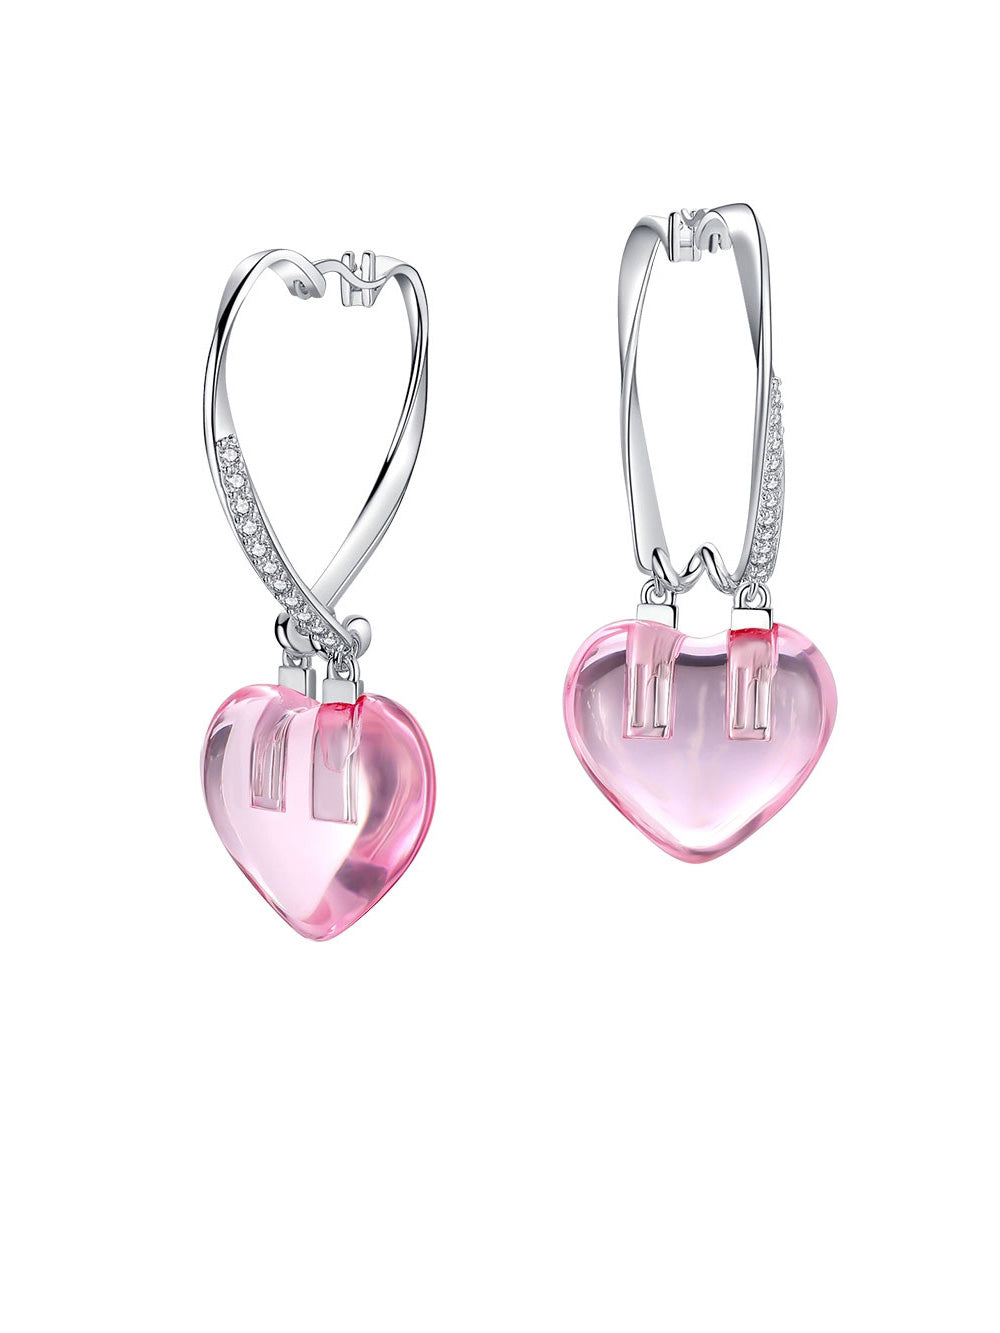 MUKTANK×GEL E LUA Digital Love Letter Pink Love Earrings